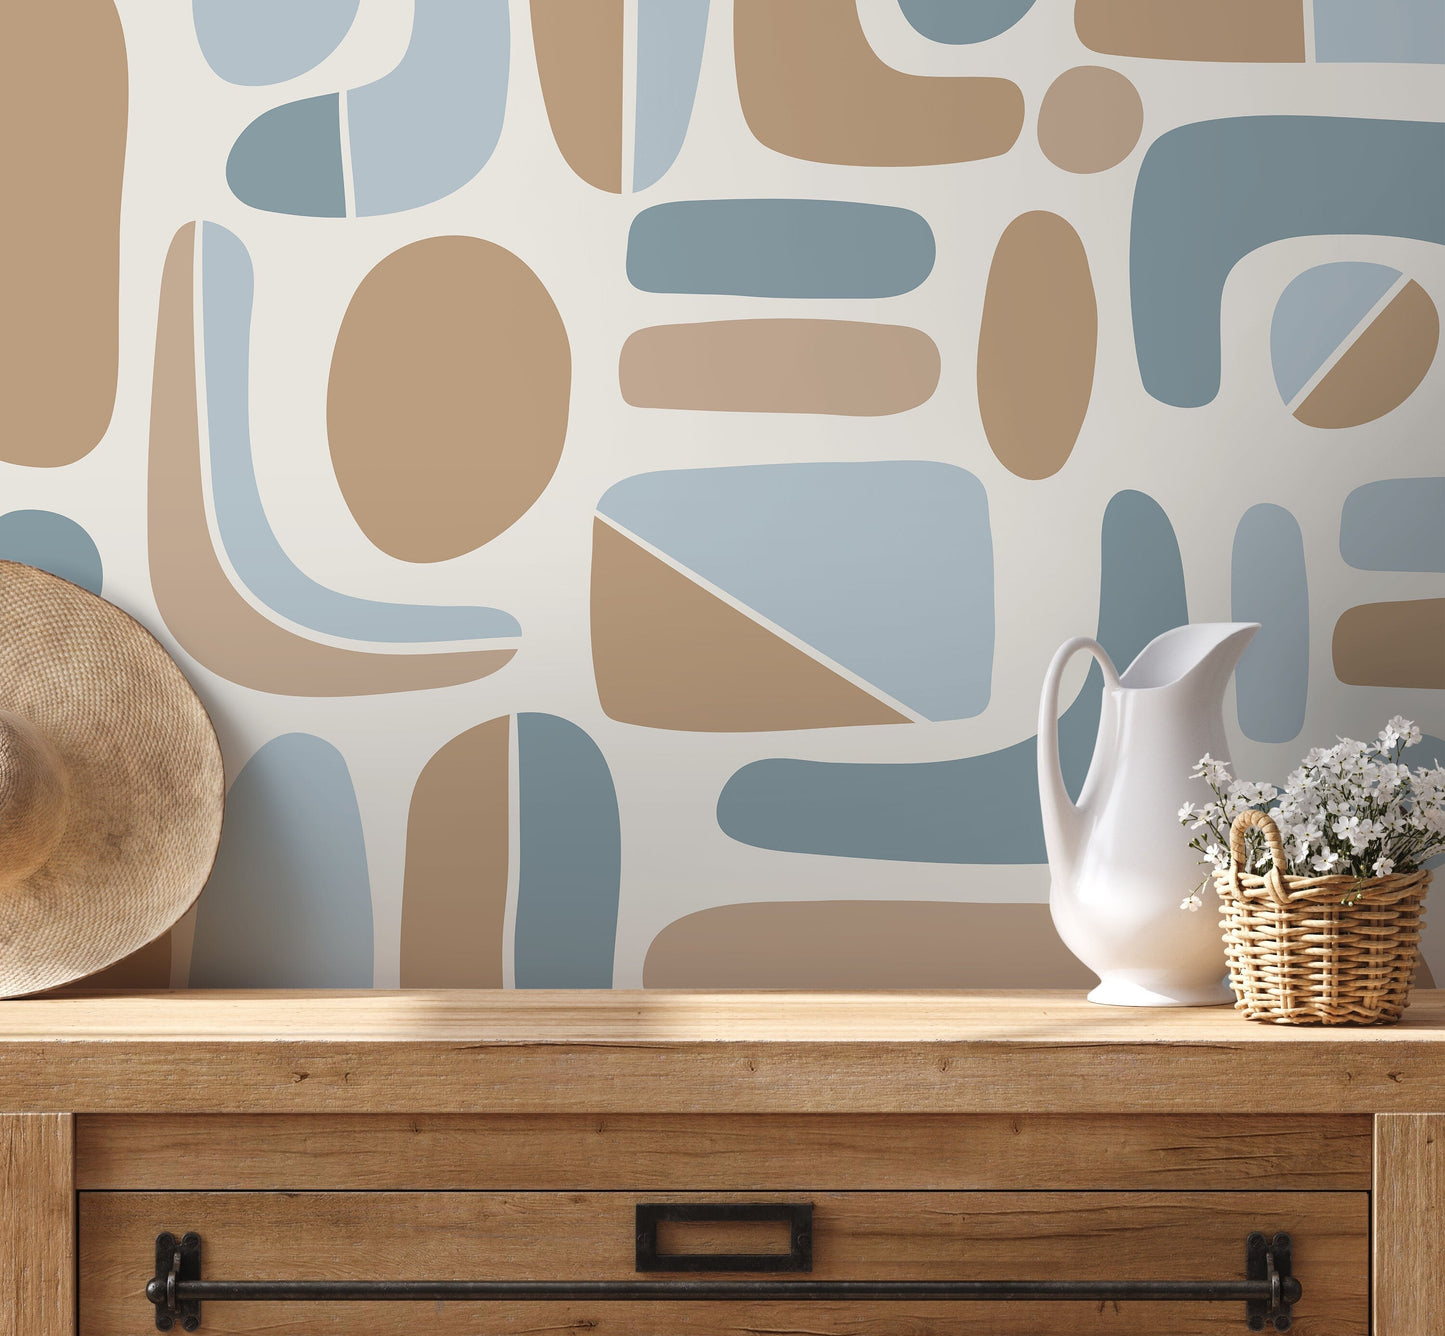 Light Blue Abstract Shapes Wallpaper / Peel and Stick Wallpaper Removable Wallpaper Home Decor Wall Art Wall Decor Room Decor - D304